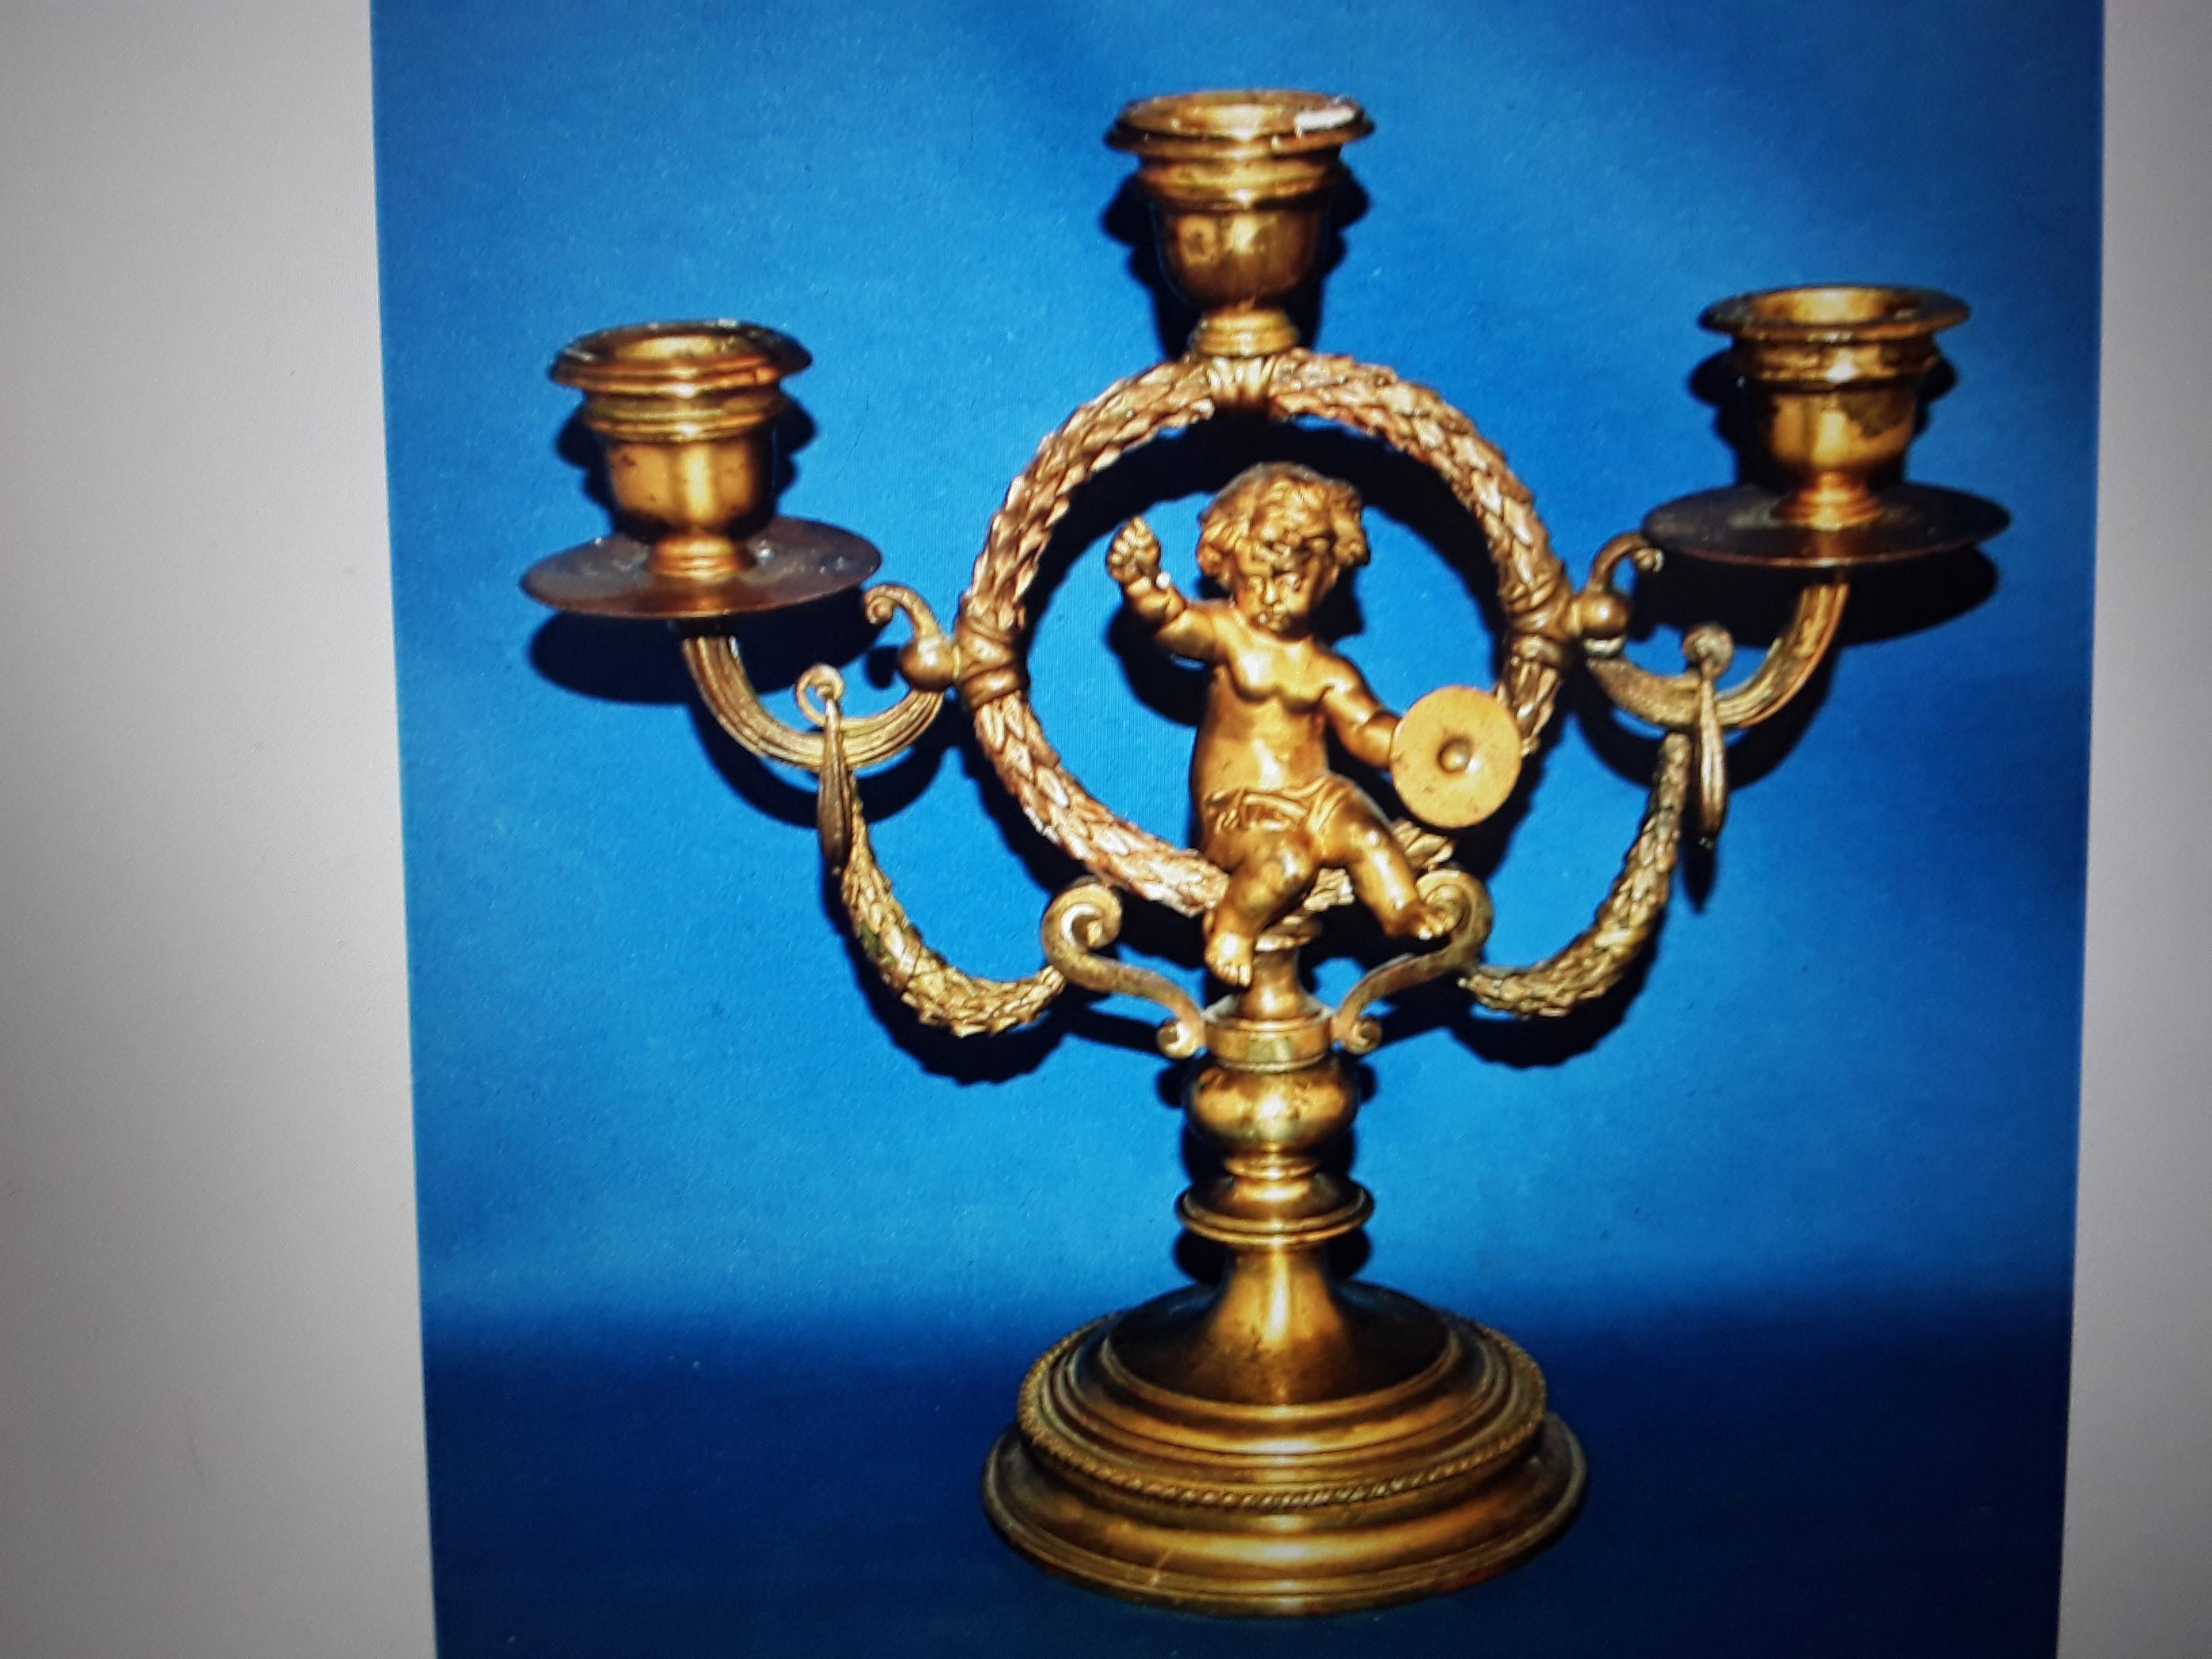 Quite Impressive 18thc French Louis XVI Gilt Bronze Musical Cherub Baby Candelabra. Rare piece! and a lovely candelabrum.